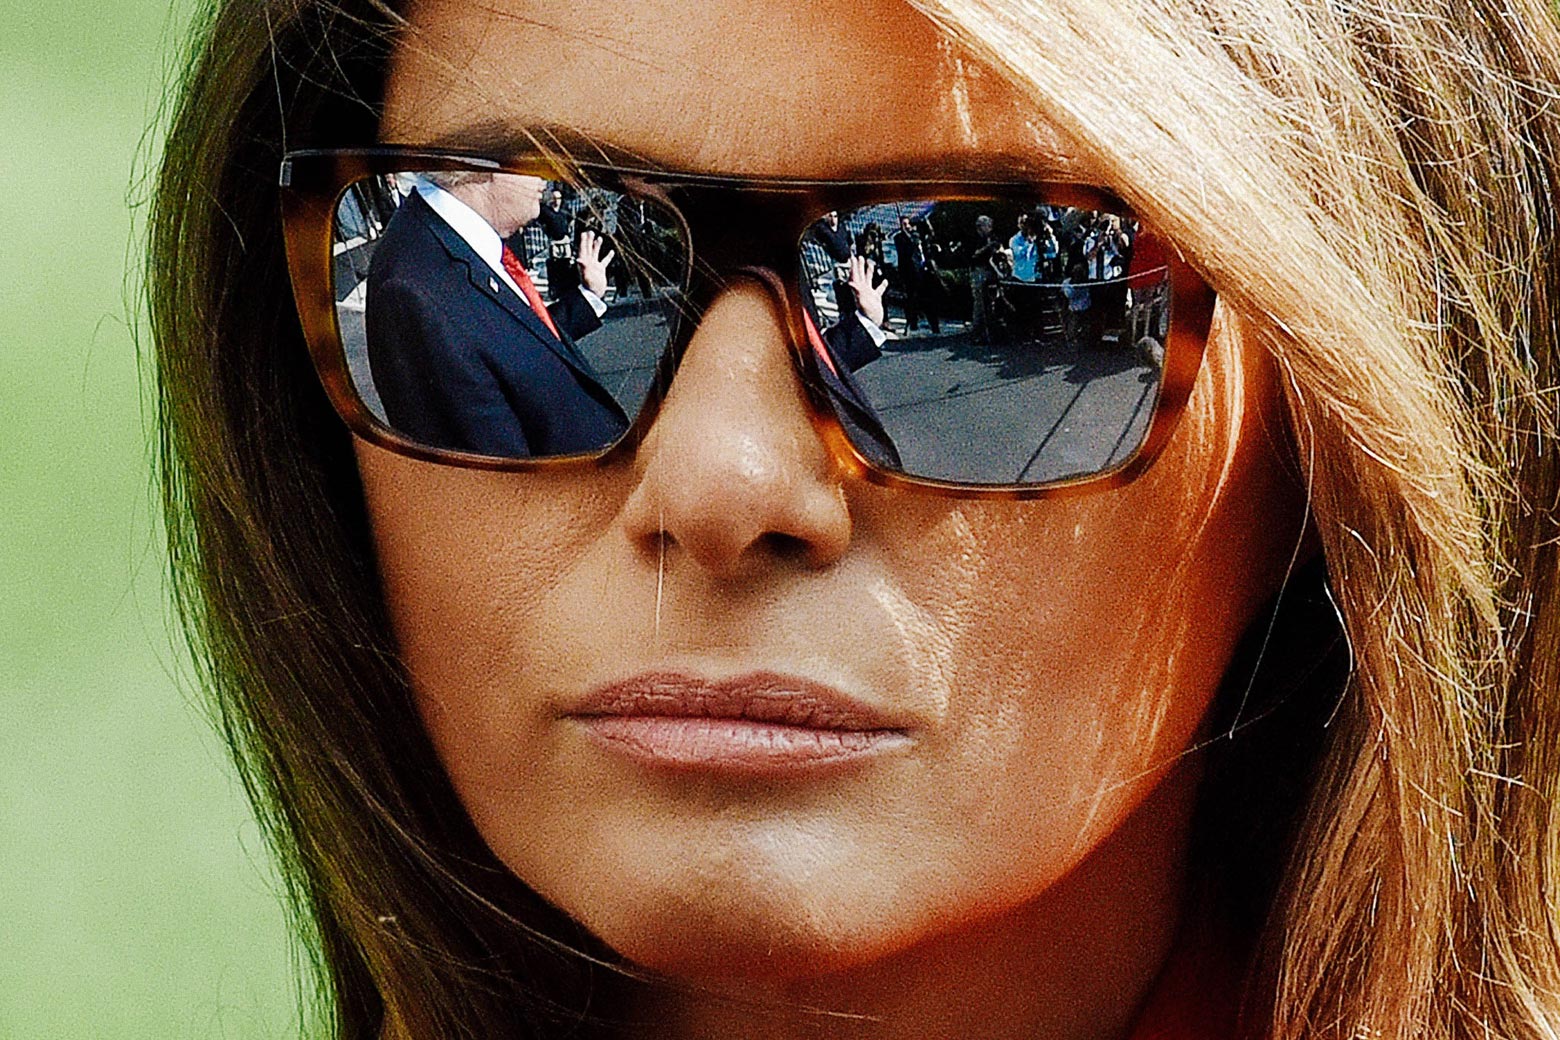 A close-up of Melania Trump's face wearing sunglasses.